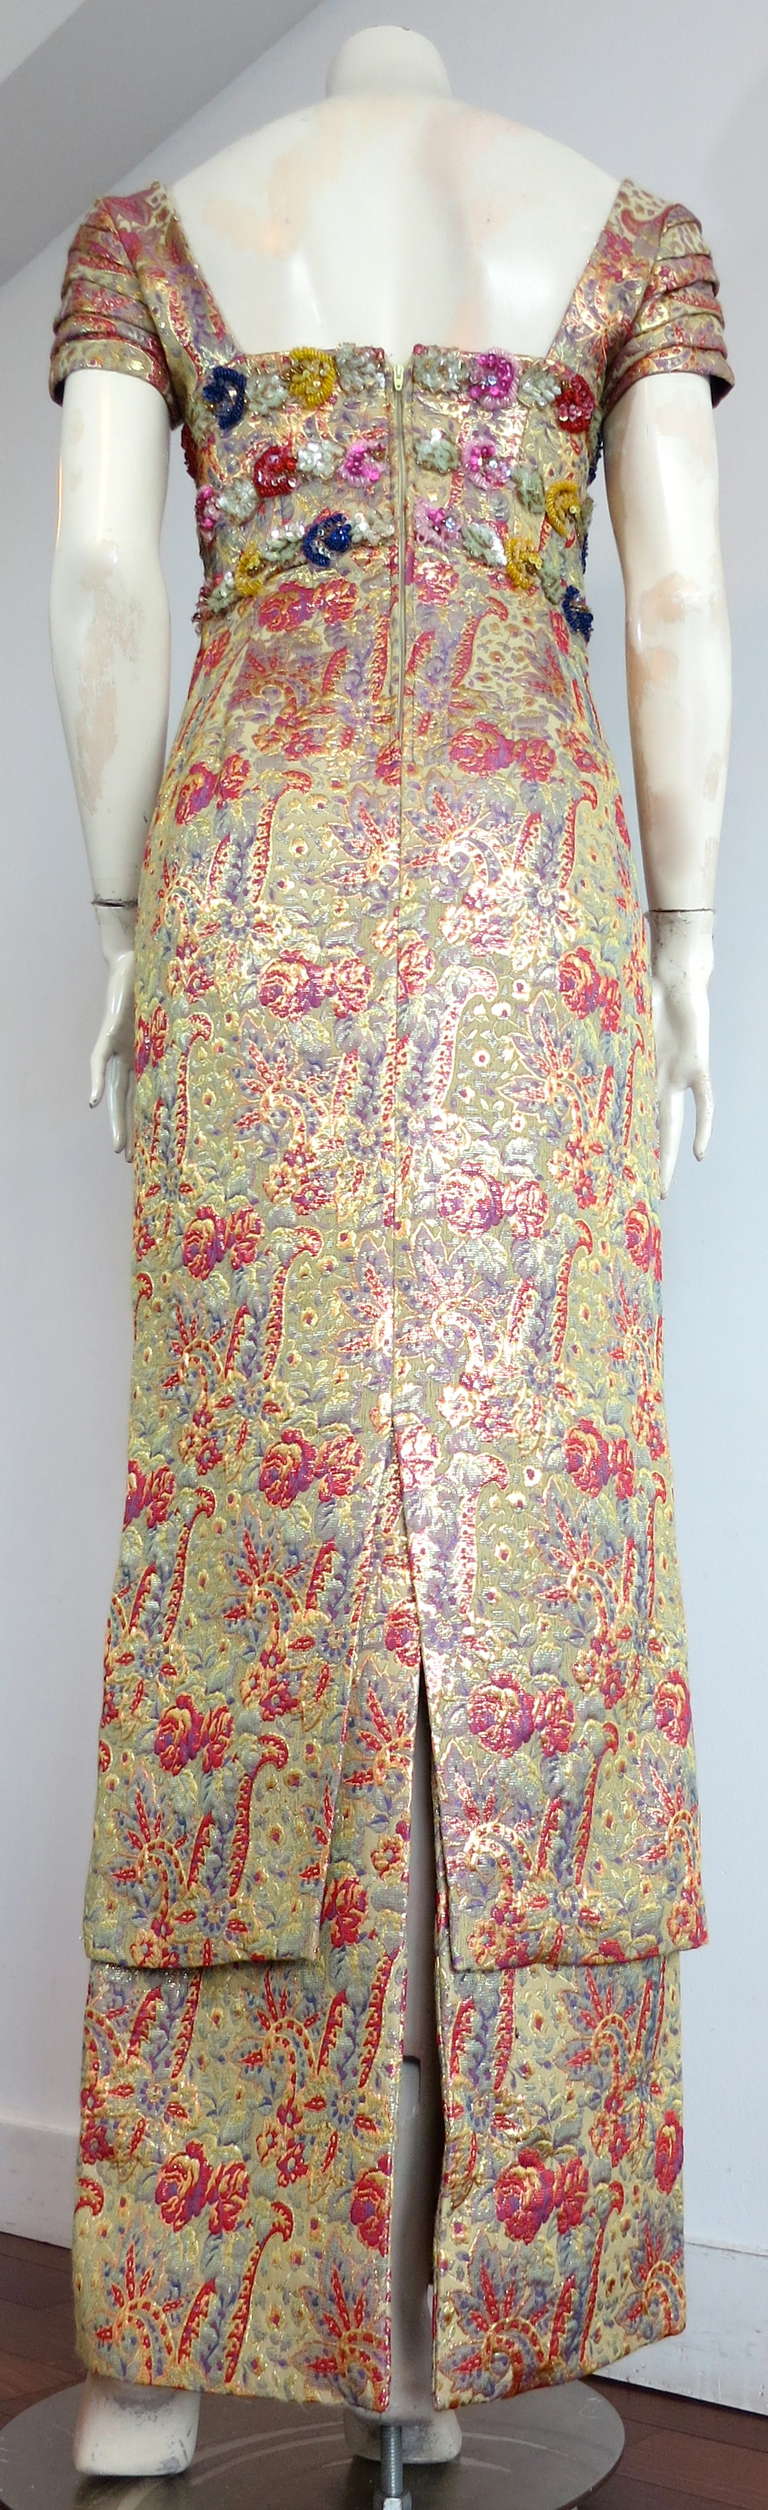 Vintage hand-beaded brocade evening dress For Sale 1